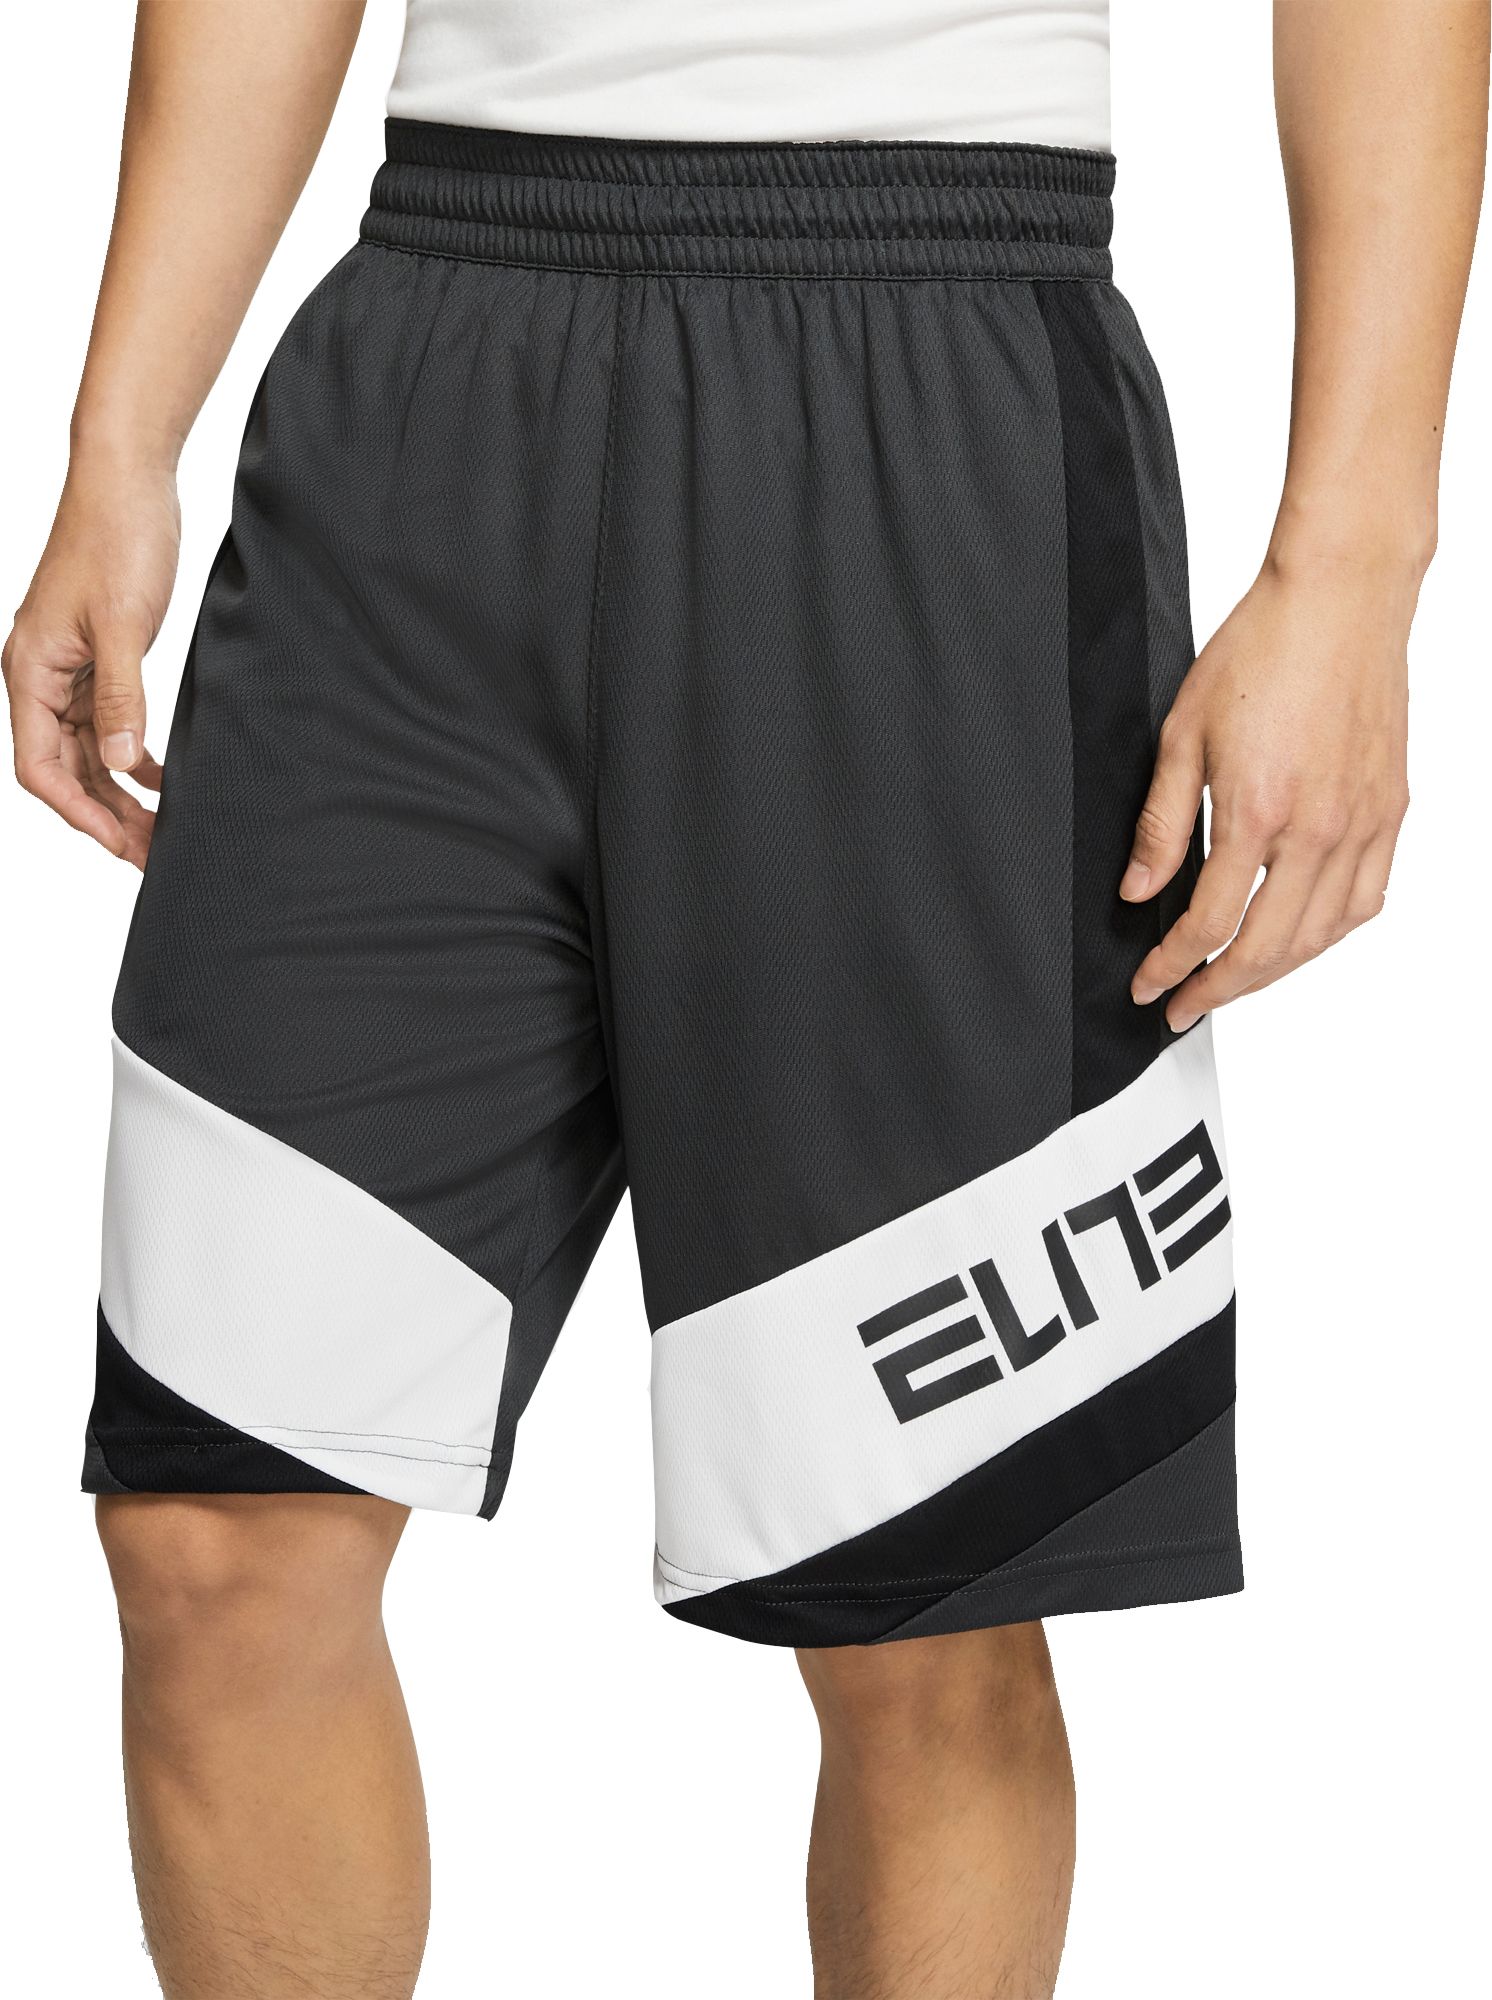 nike elite shorts mens sale